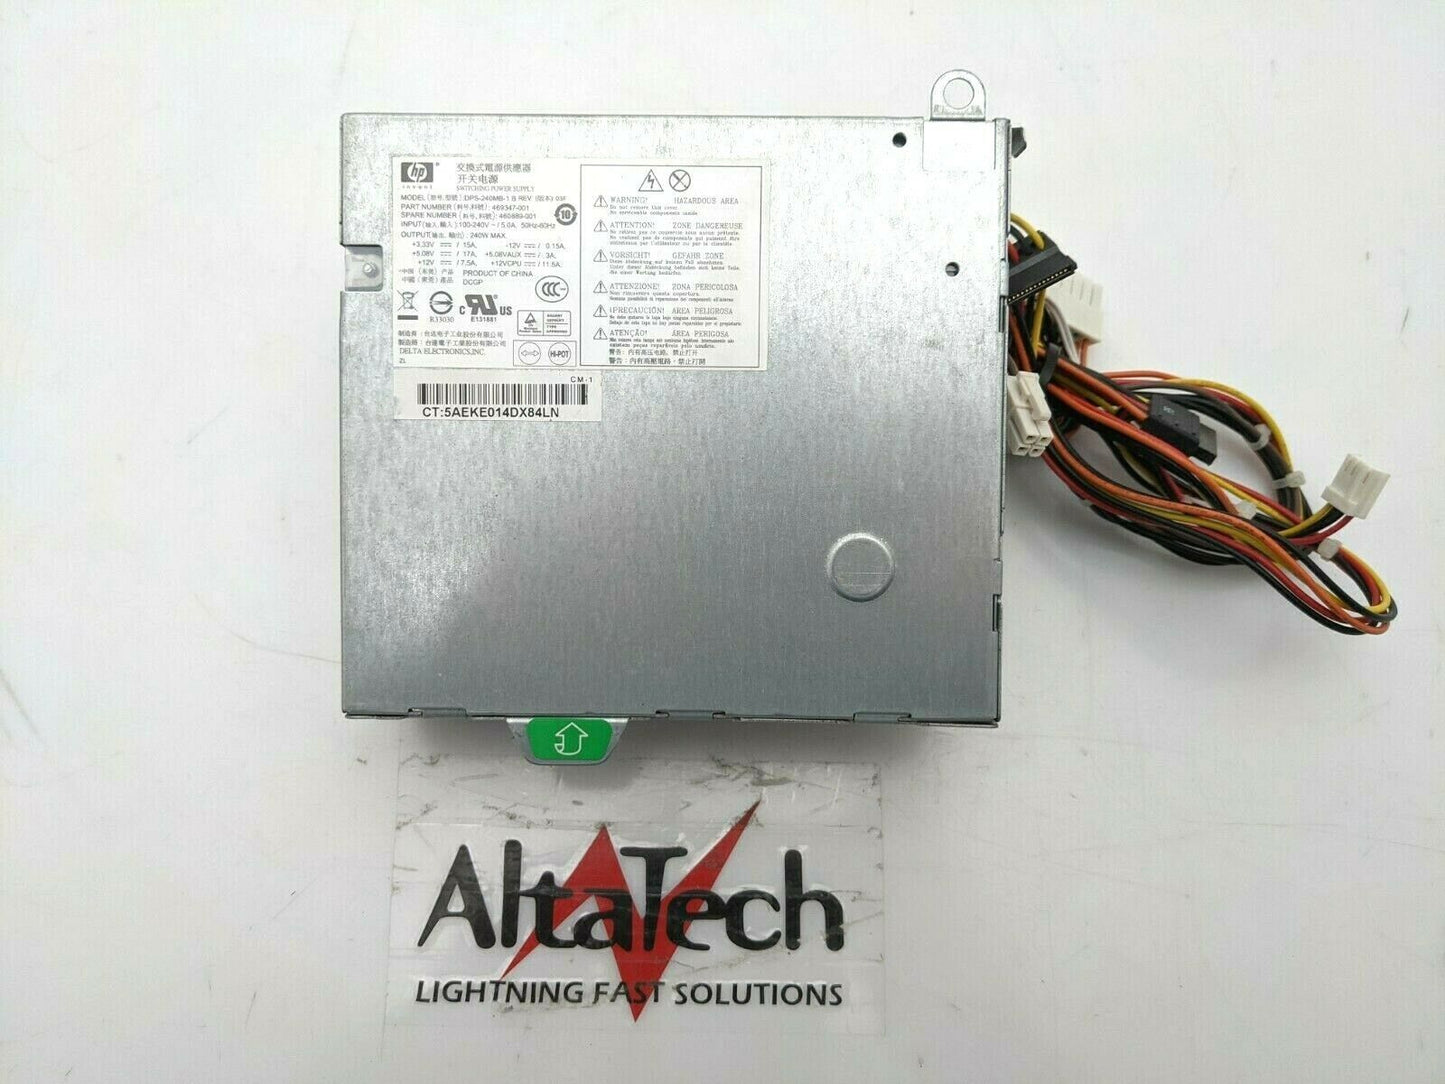 HP 460889-001 240W ATX Power Supply, Used